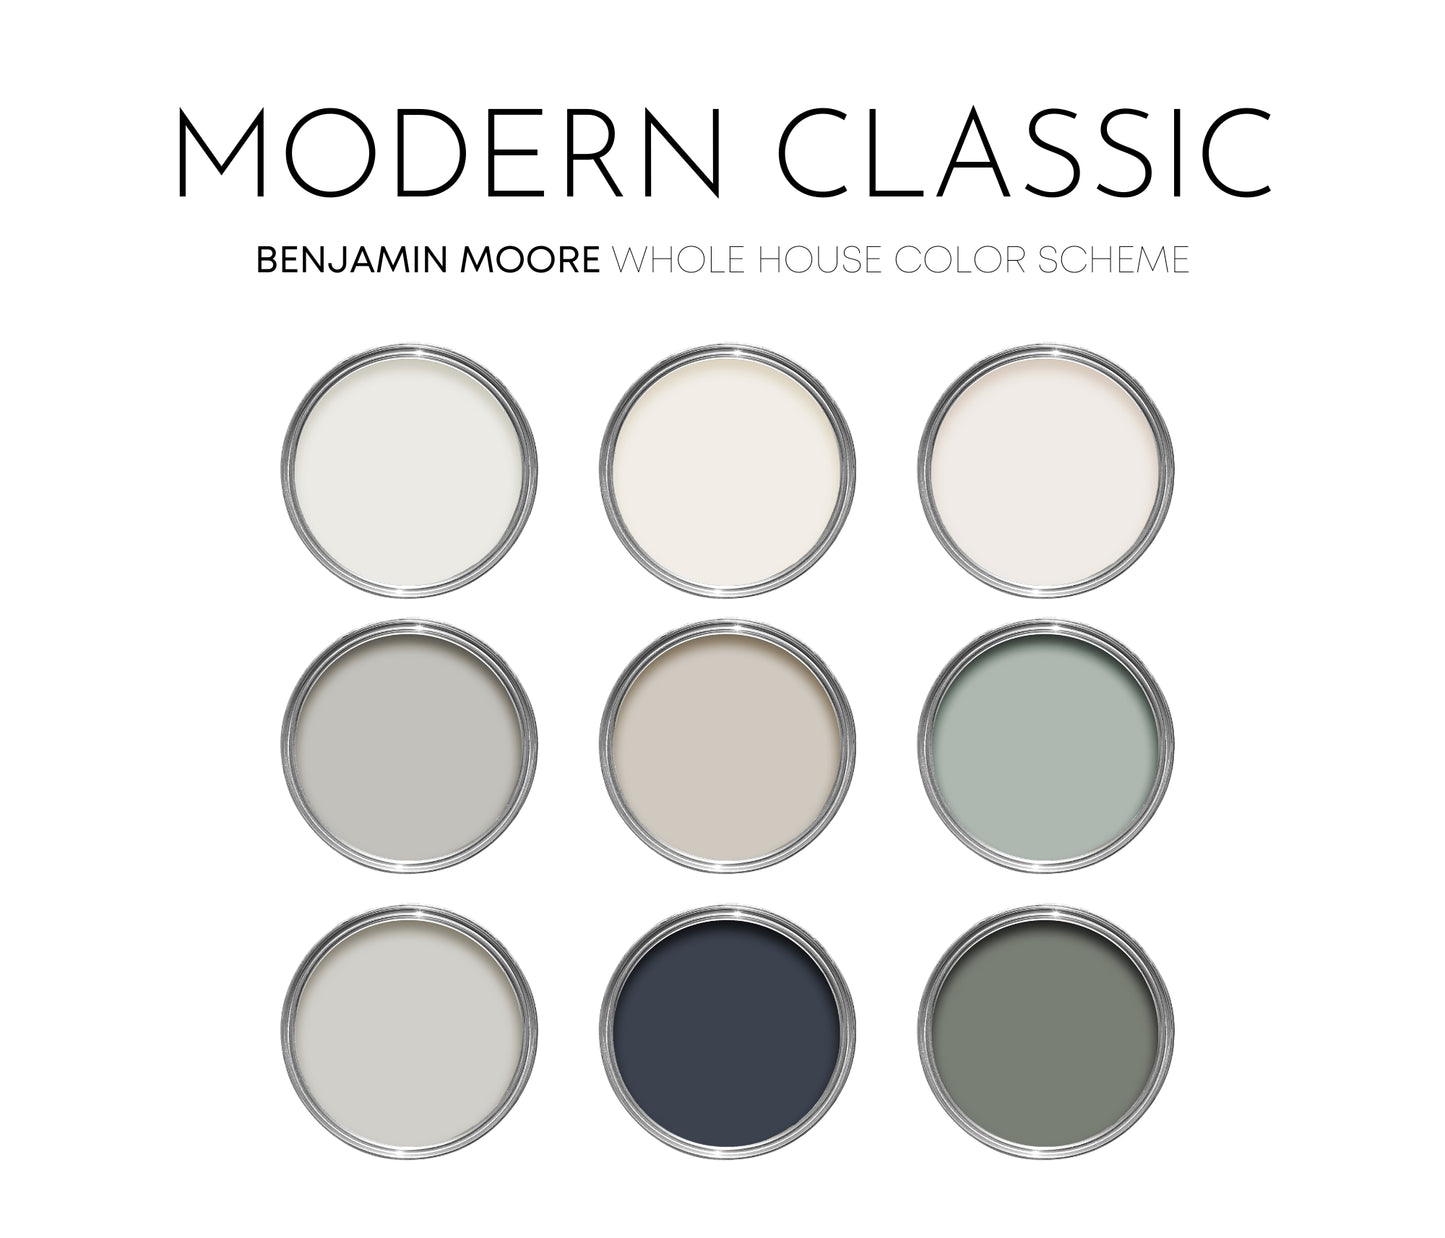 Modern Classic Benjamin Moore Paint Palette, Warm Neutrals, Interior Paint Colors, Coordinating Interior Design, Color Palette, Swiss Coffee